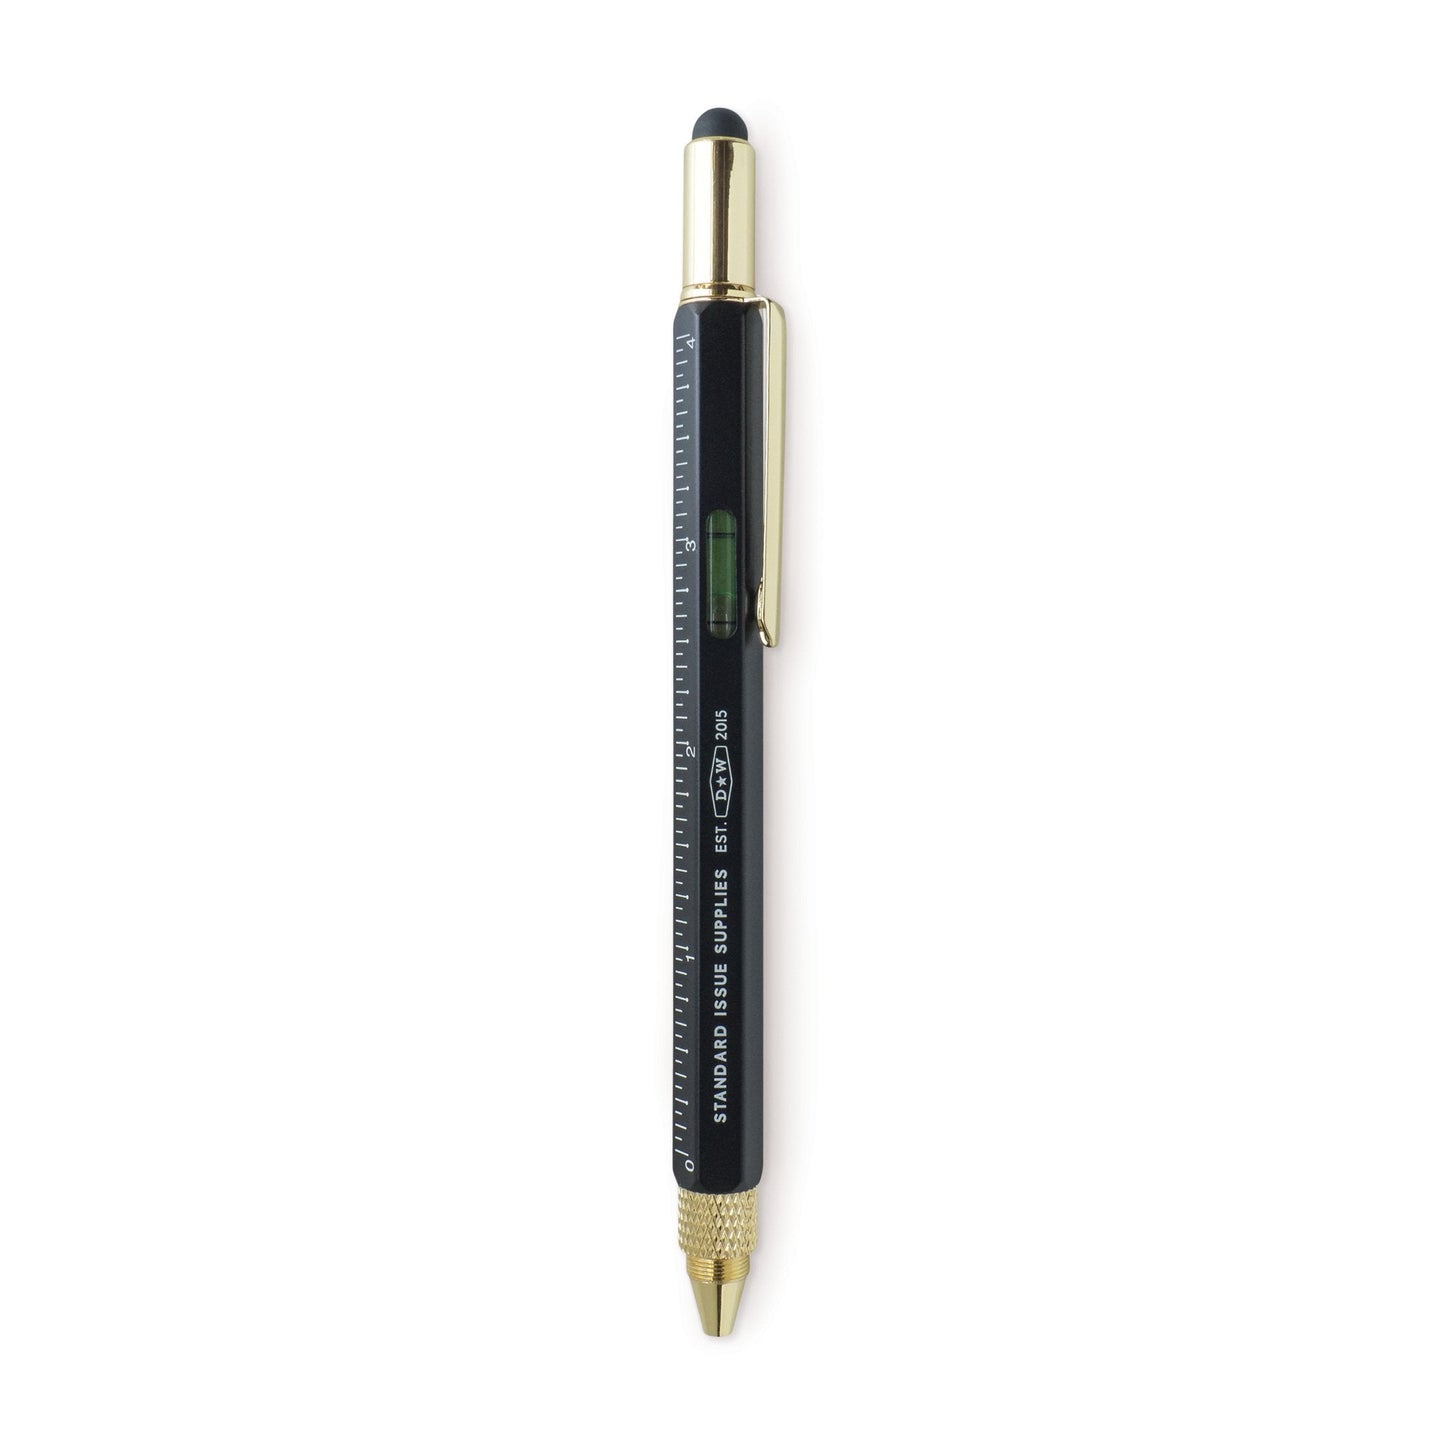 Black 6-in-1 Multi-Tool Pen